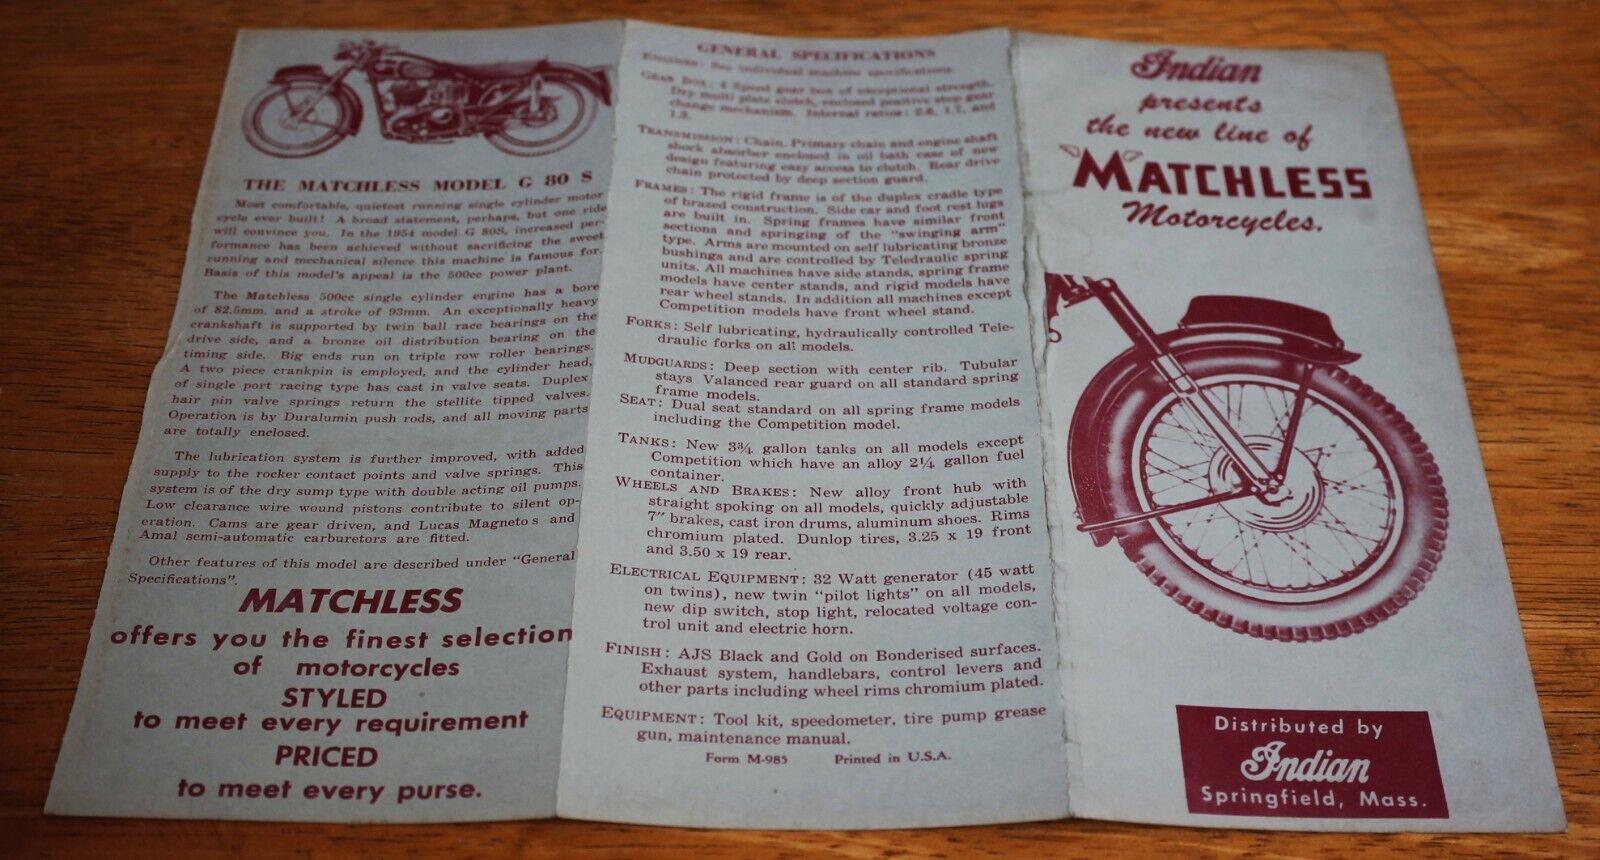 Original 1954 Indian AJS Matchless Motorcycle Brochure Models G80 G80S G80CS G9